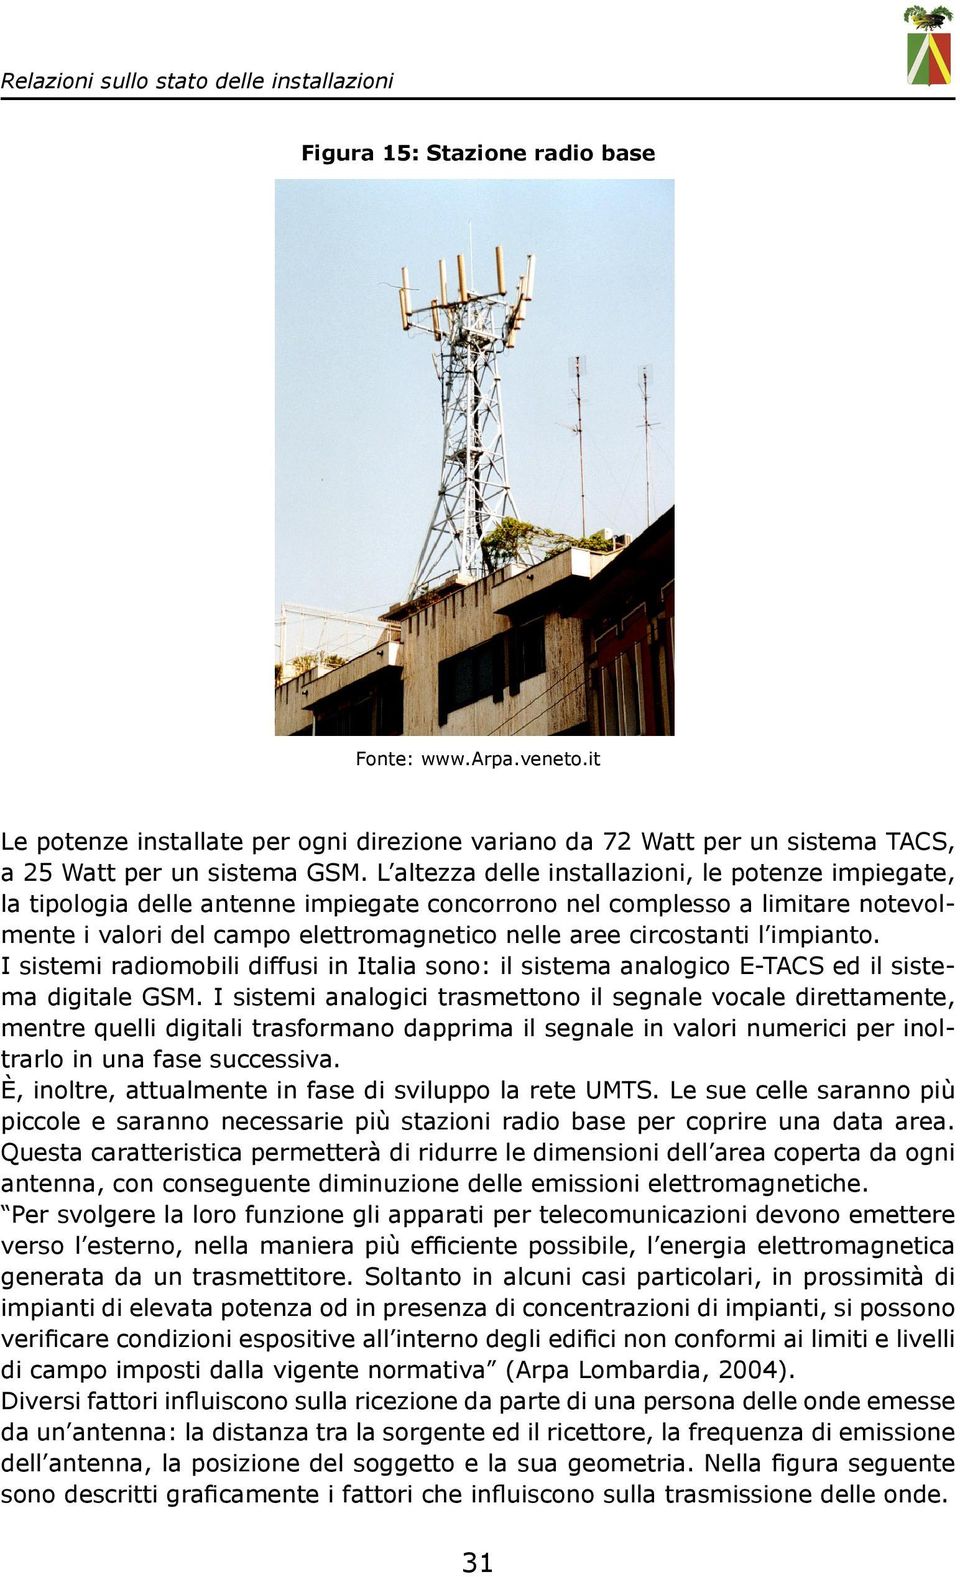 impianto. I sistemi radiomobili diffusi in Italia sono: il sistema analogico E-TACS ed il sistema digitale GSM.